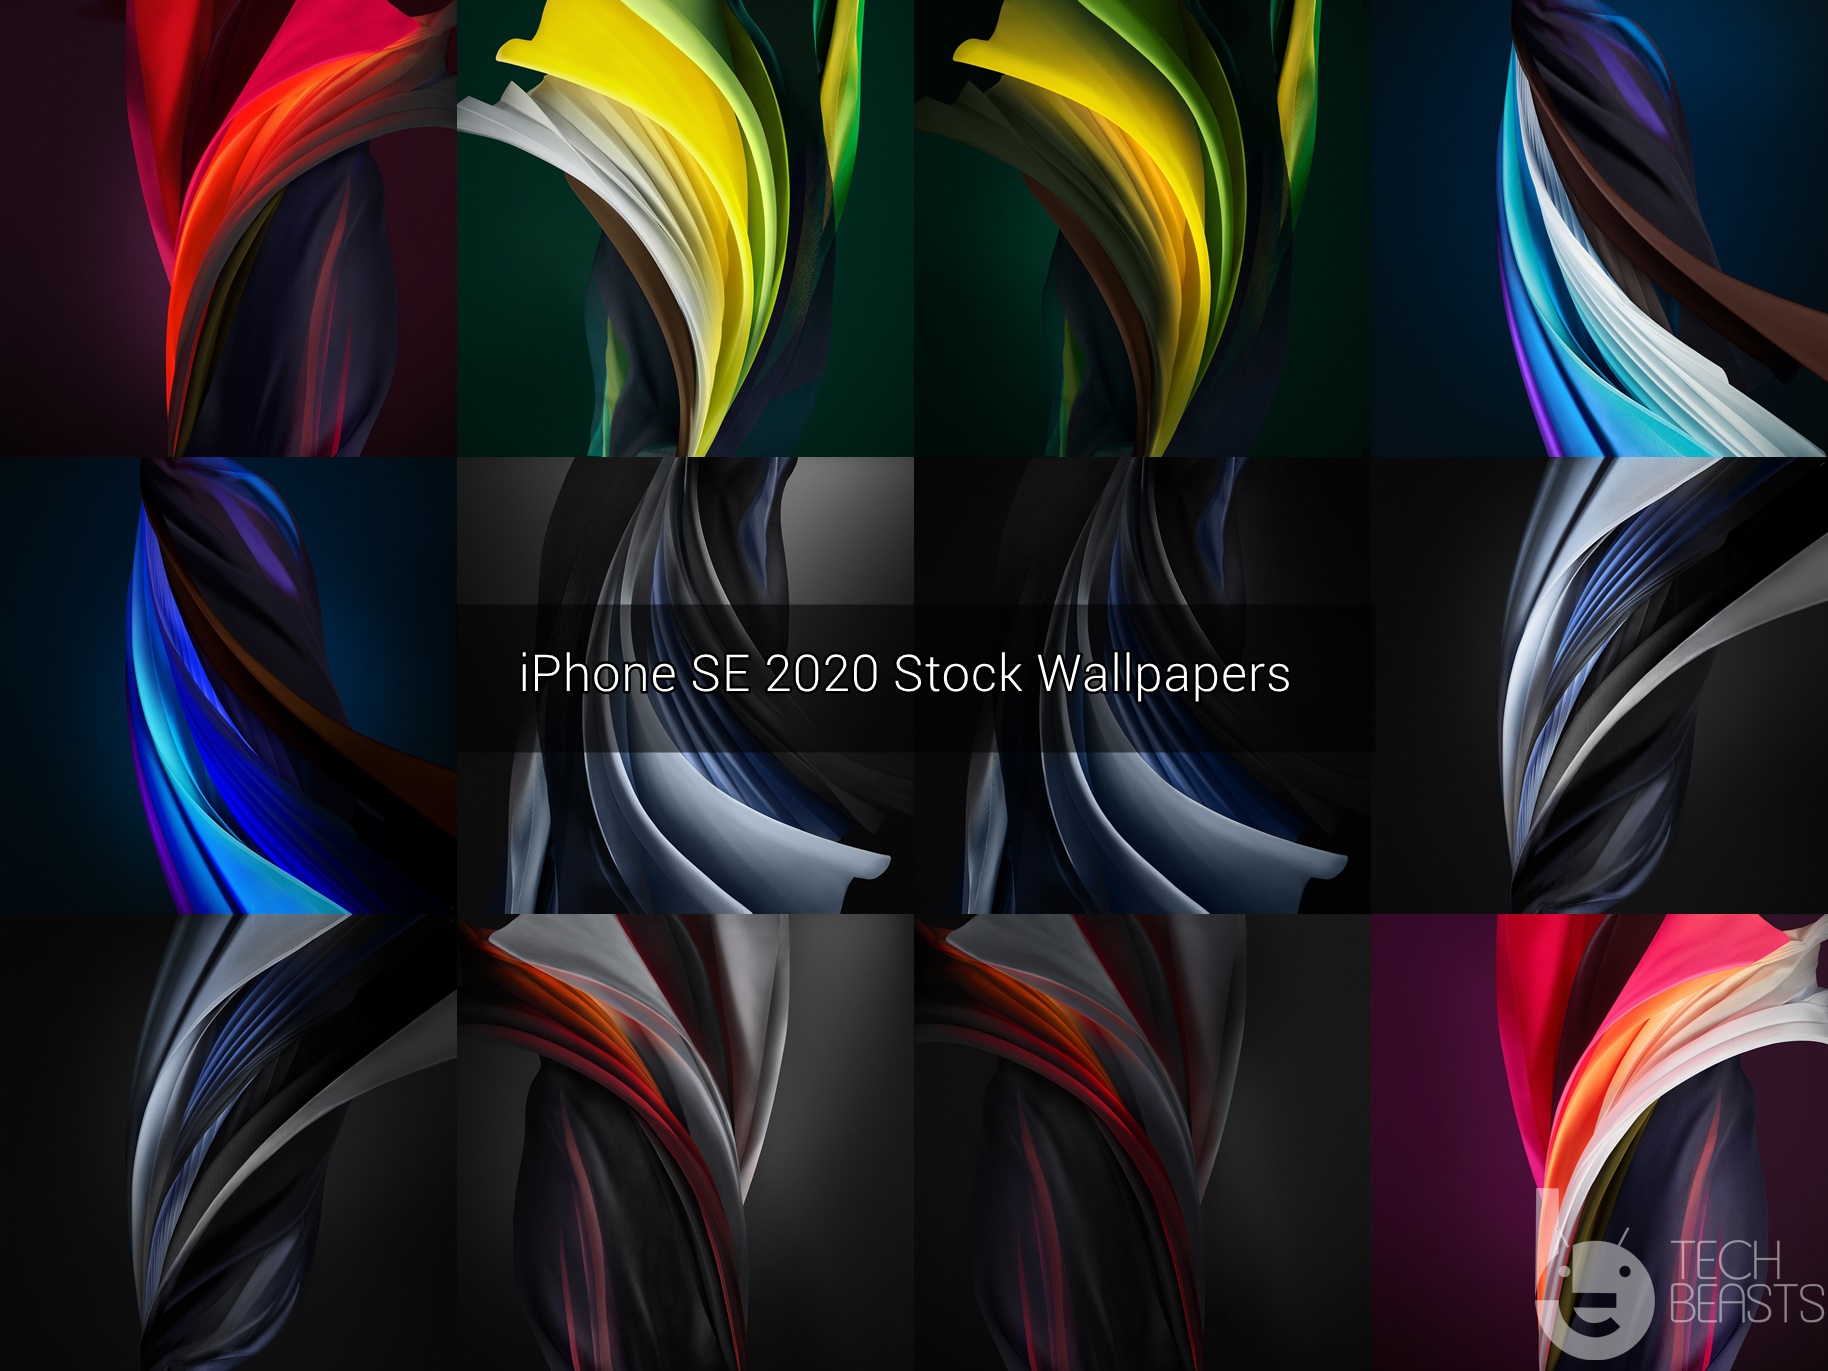 Download iPhone SE 2020 Stock Wallpapers | TechBeasts